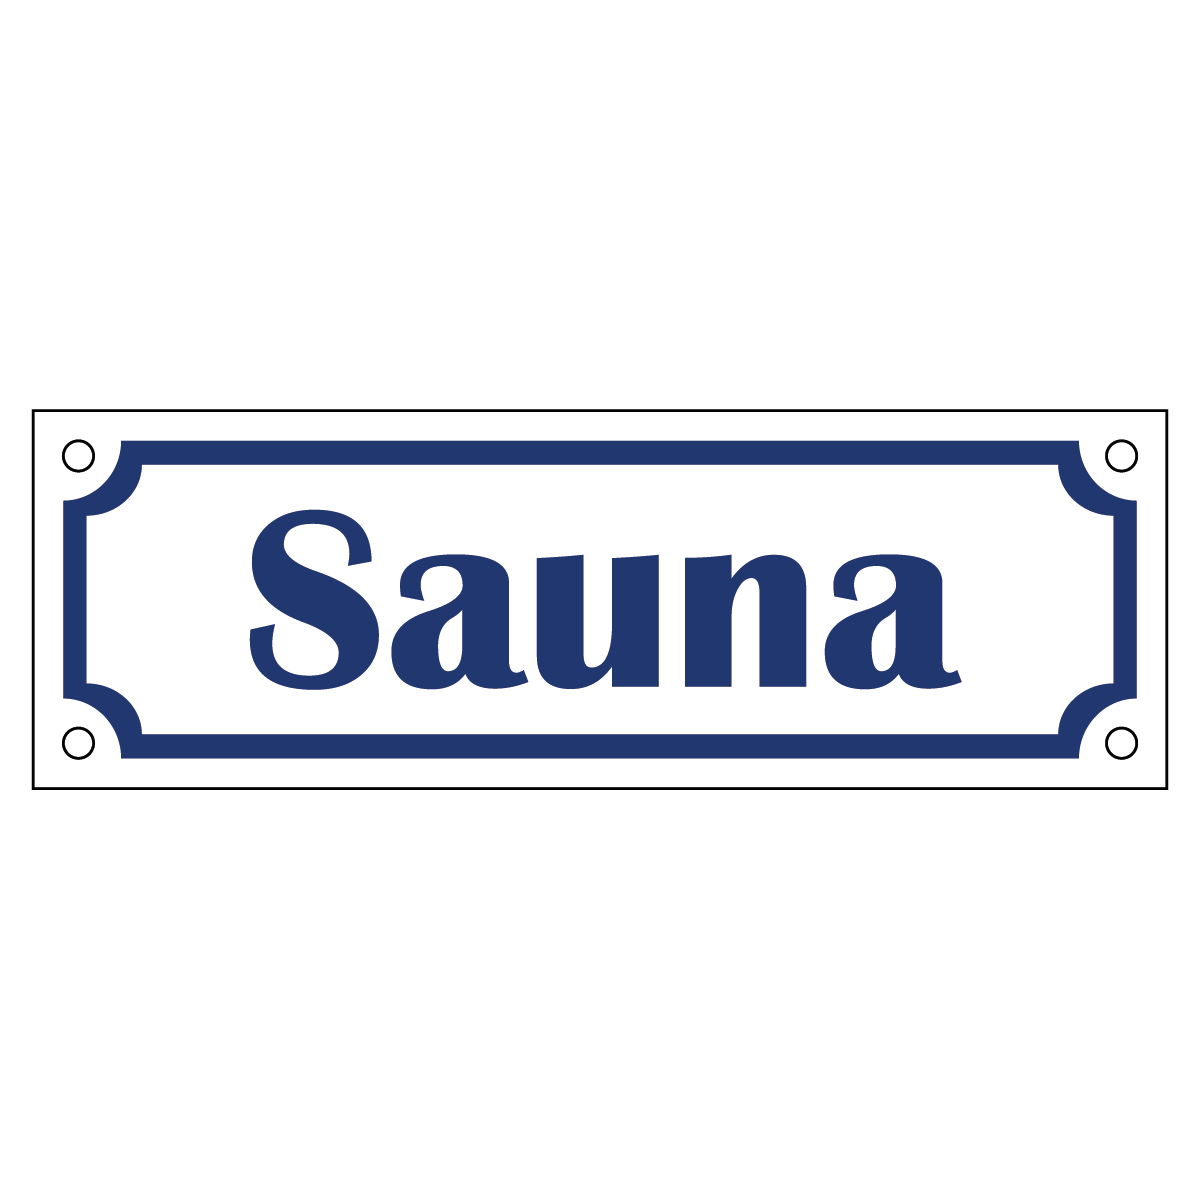 Sauna - Skylt - 150x50mm - Vit - Blå